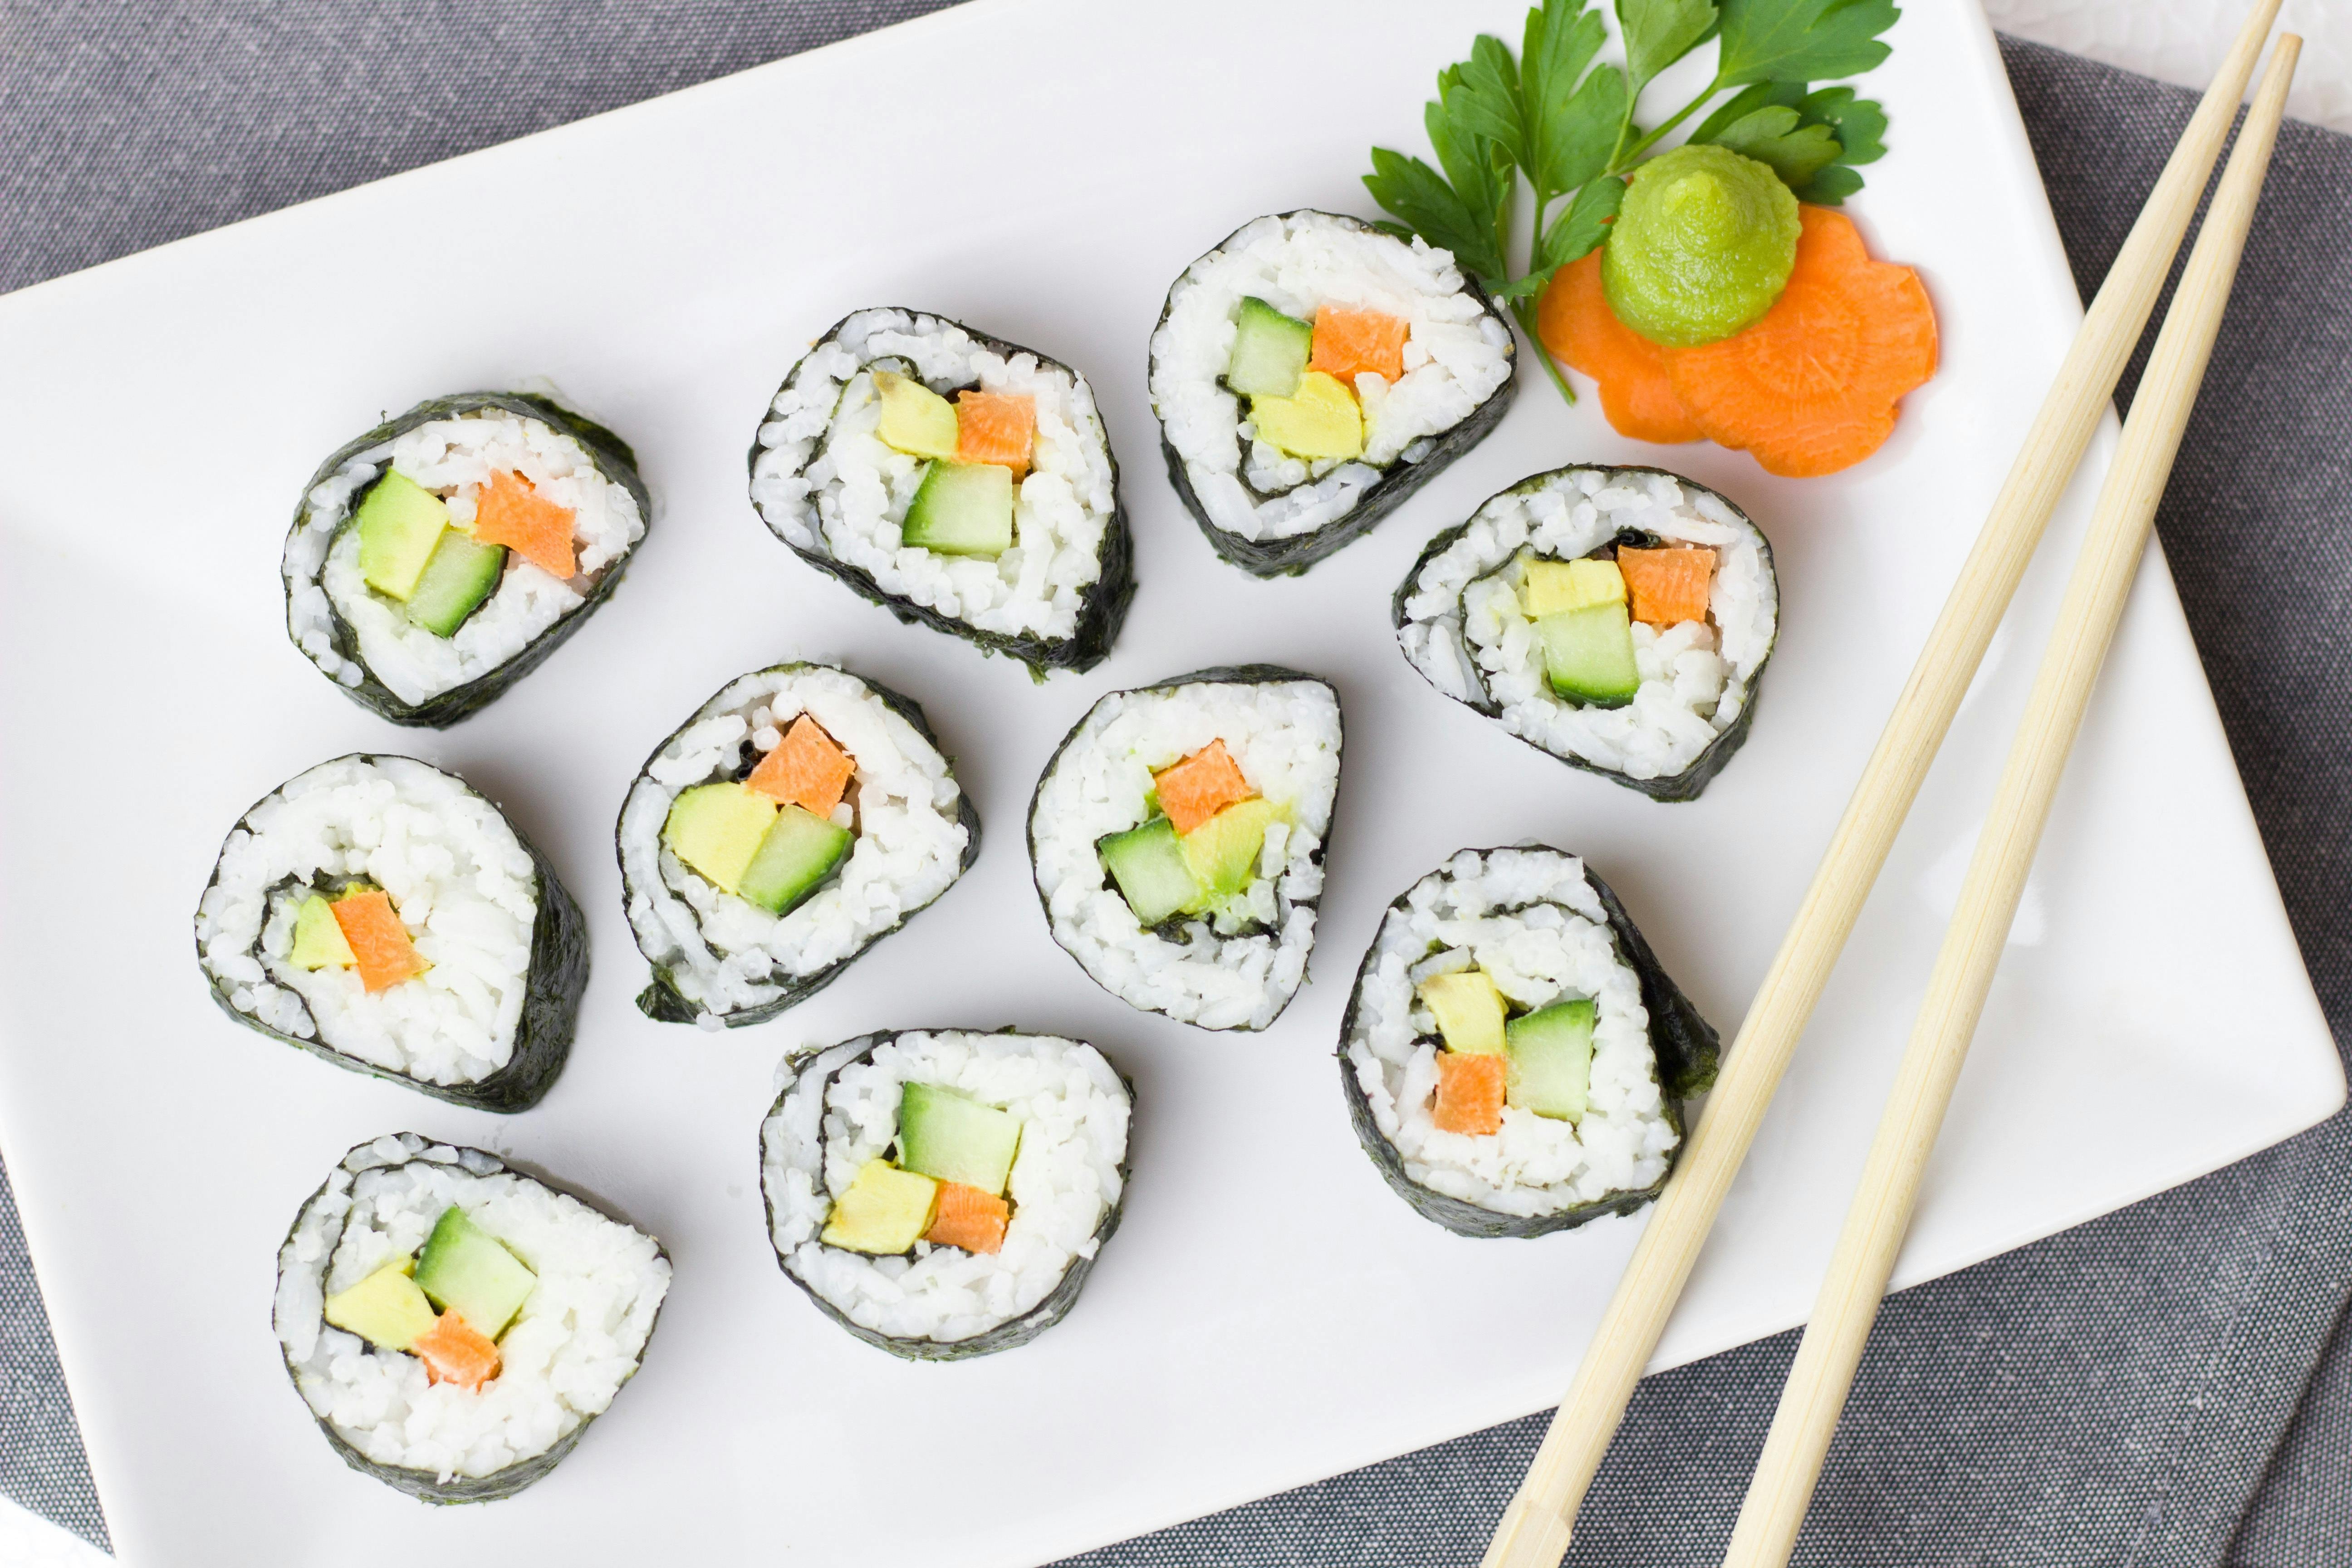 20997 Sushi Wallpaper Images Stock Photos  Vectors  Shutterstock